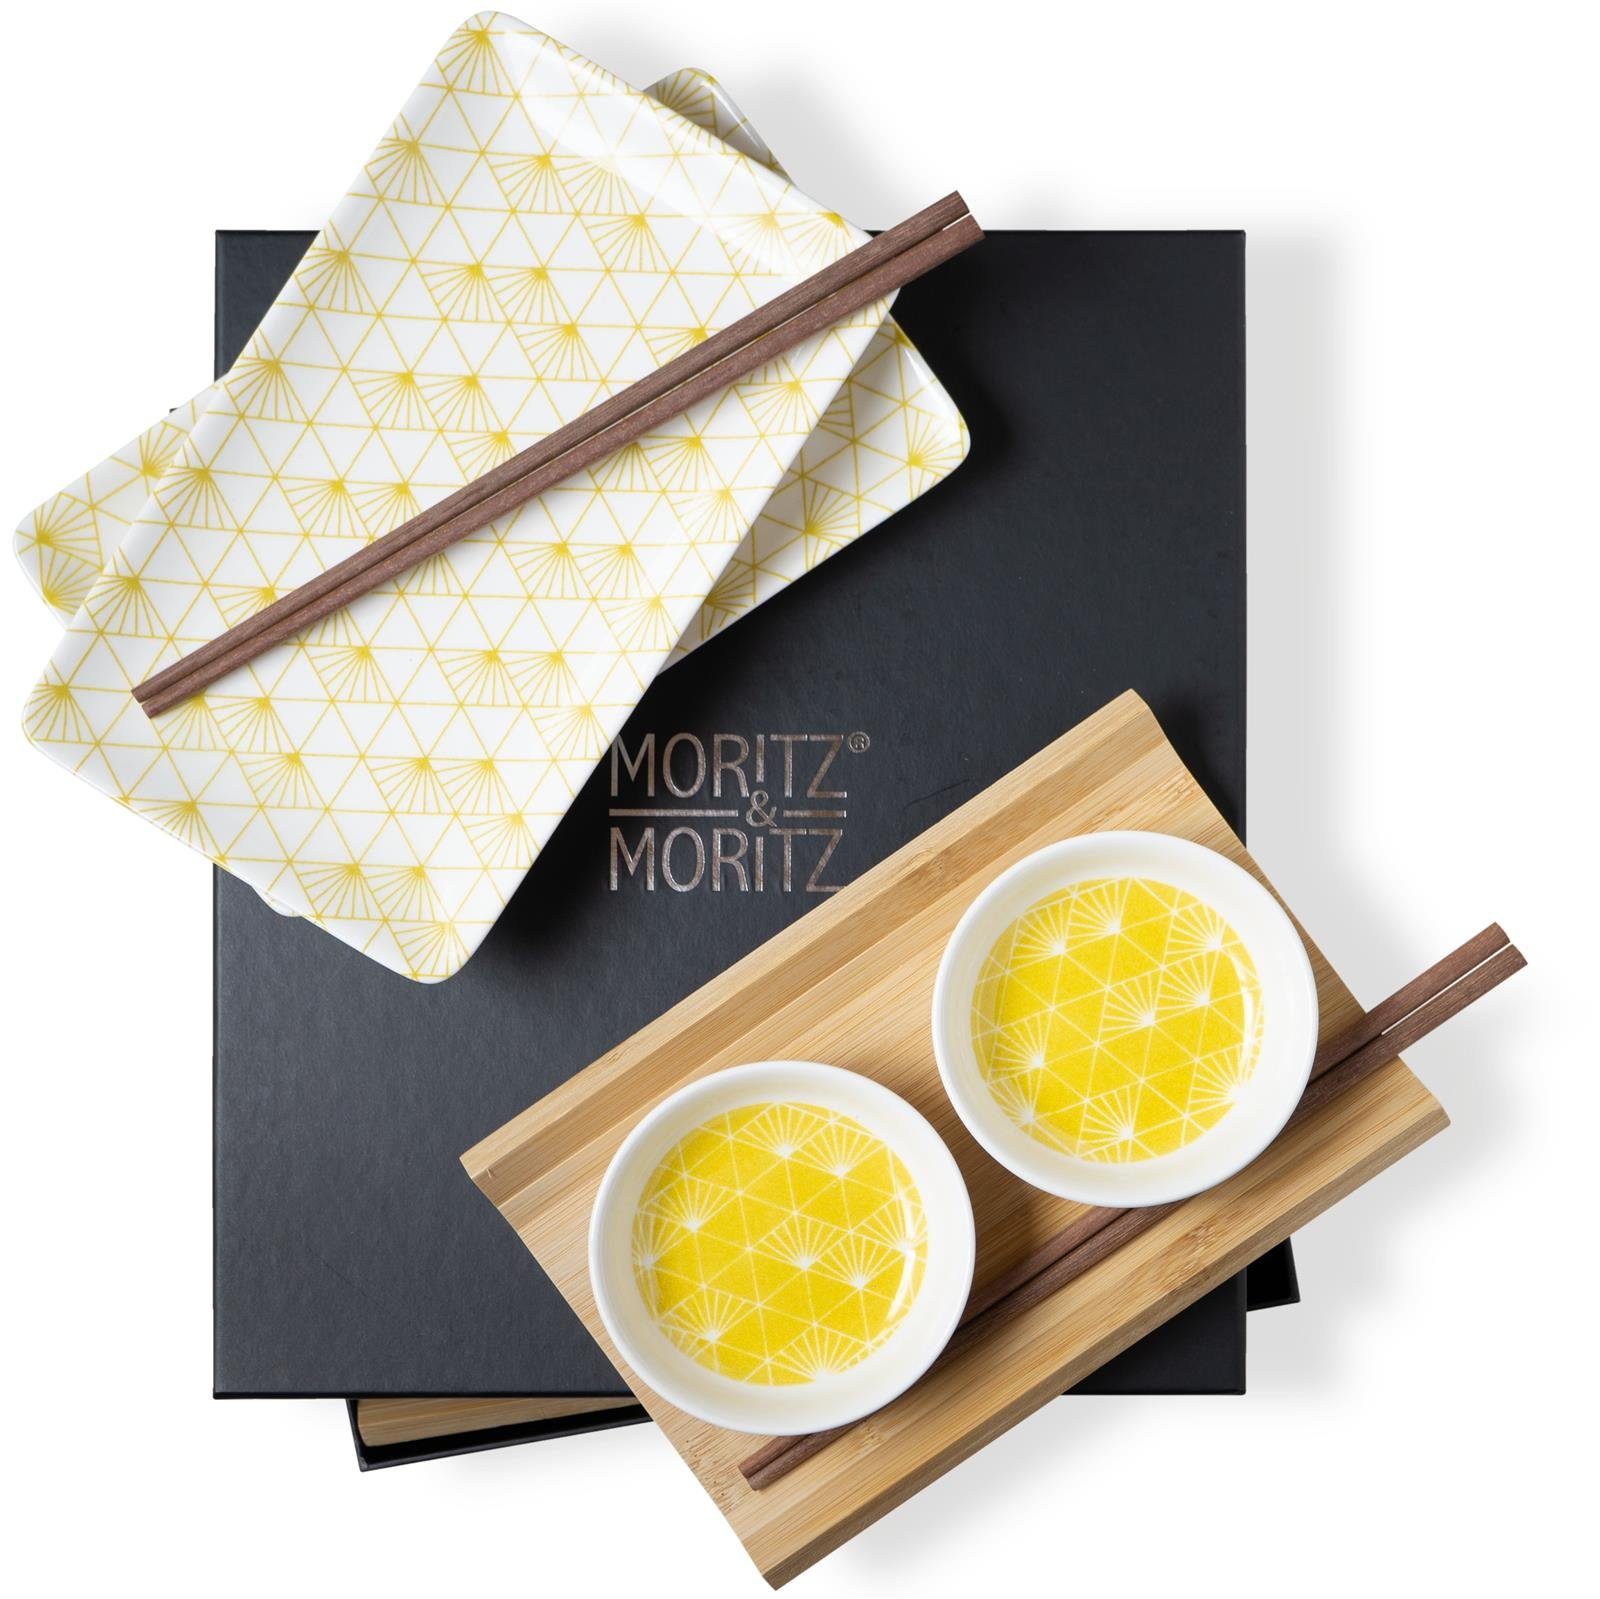 Moritz & Moritz Tafelservice Moritz & Moritz Gourmet - Sushi Set 10 teilig gelbe Strahlen (8-tlg), 2 Personen, Porzellan, Geschirrset für 2 Personen